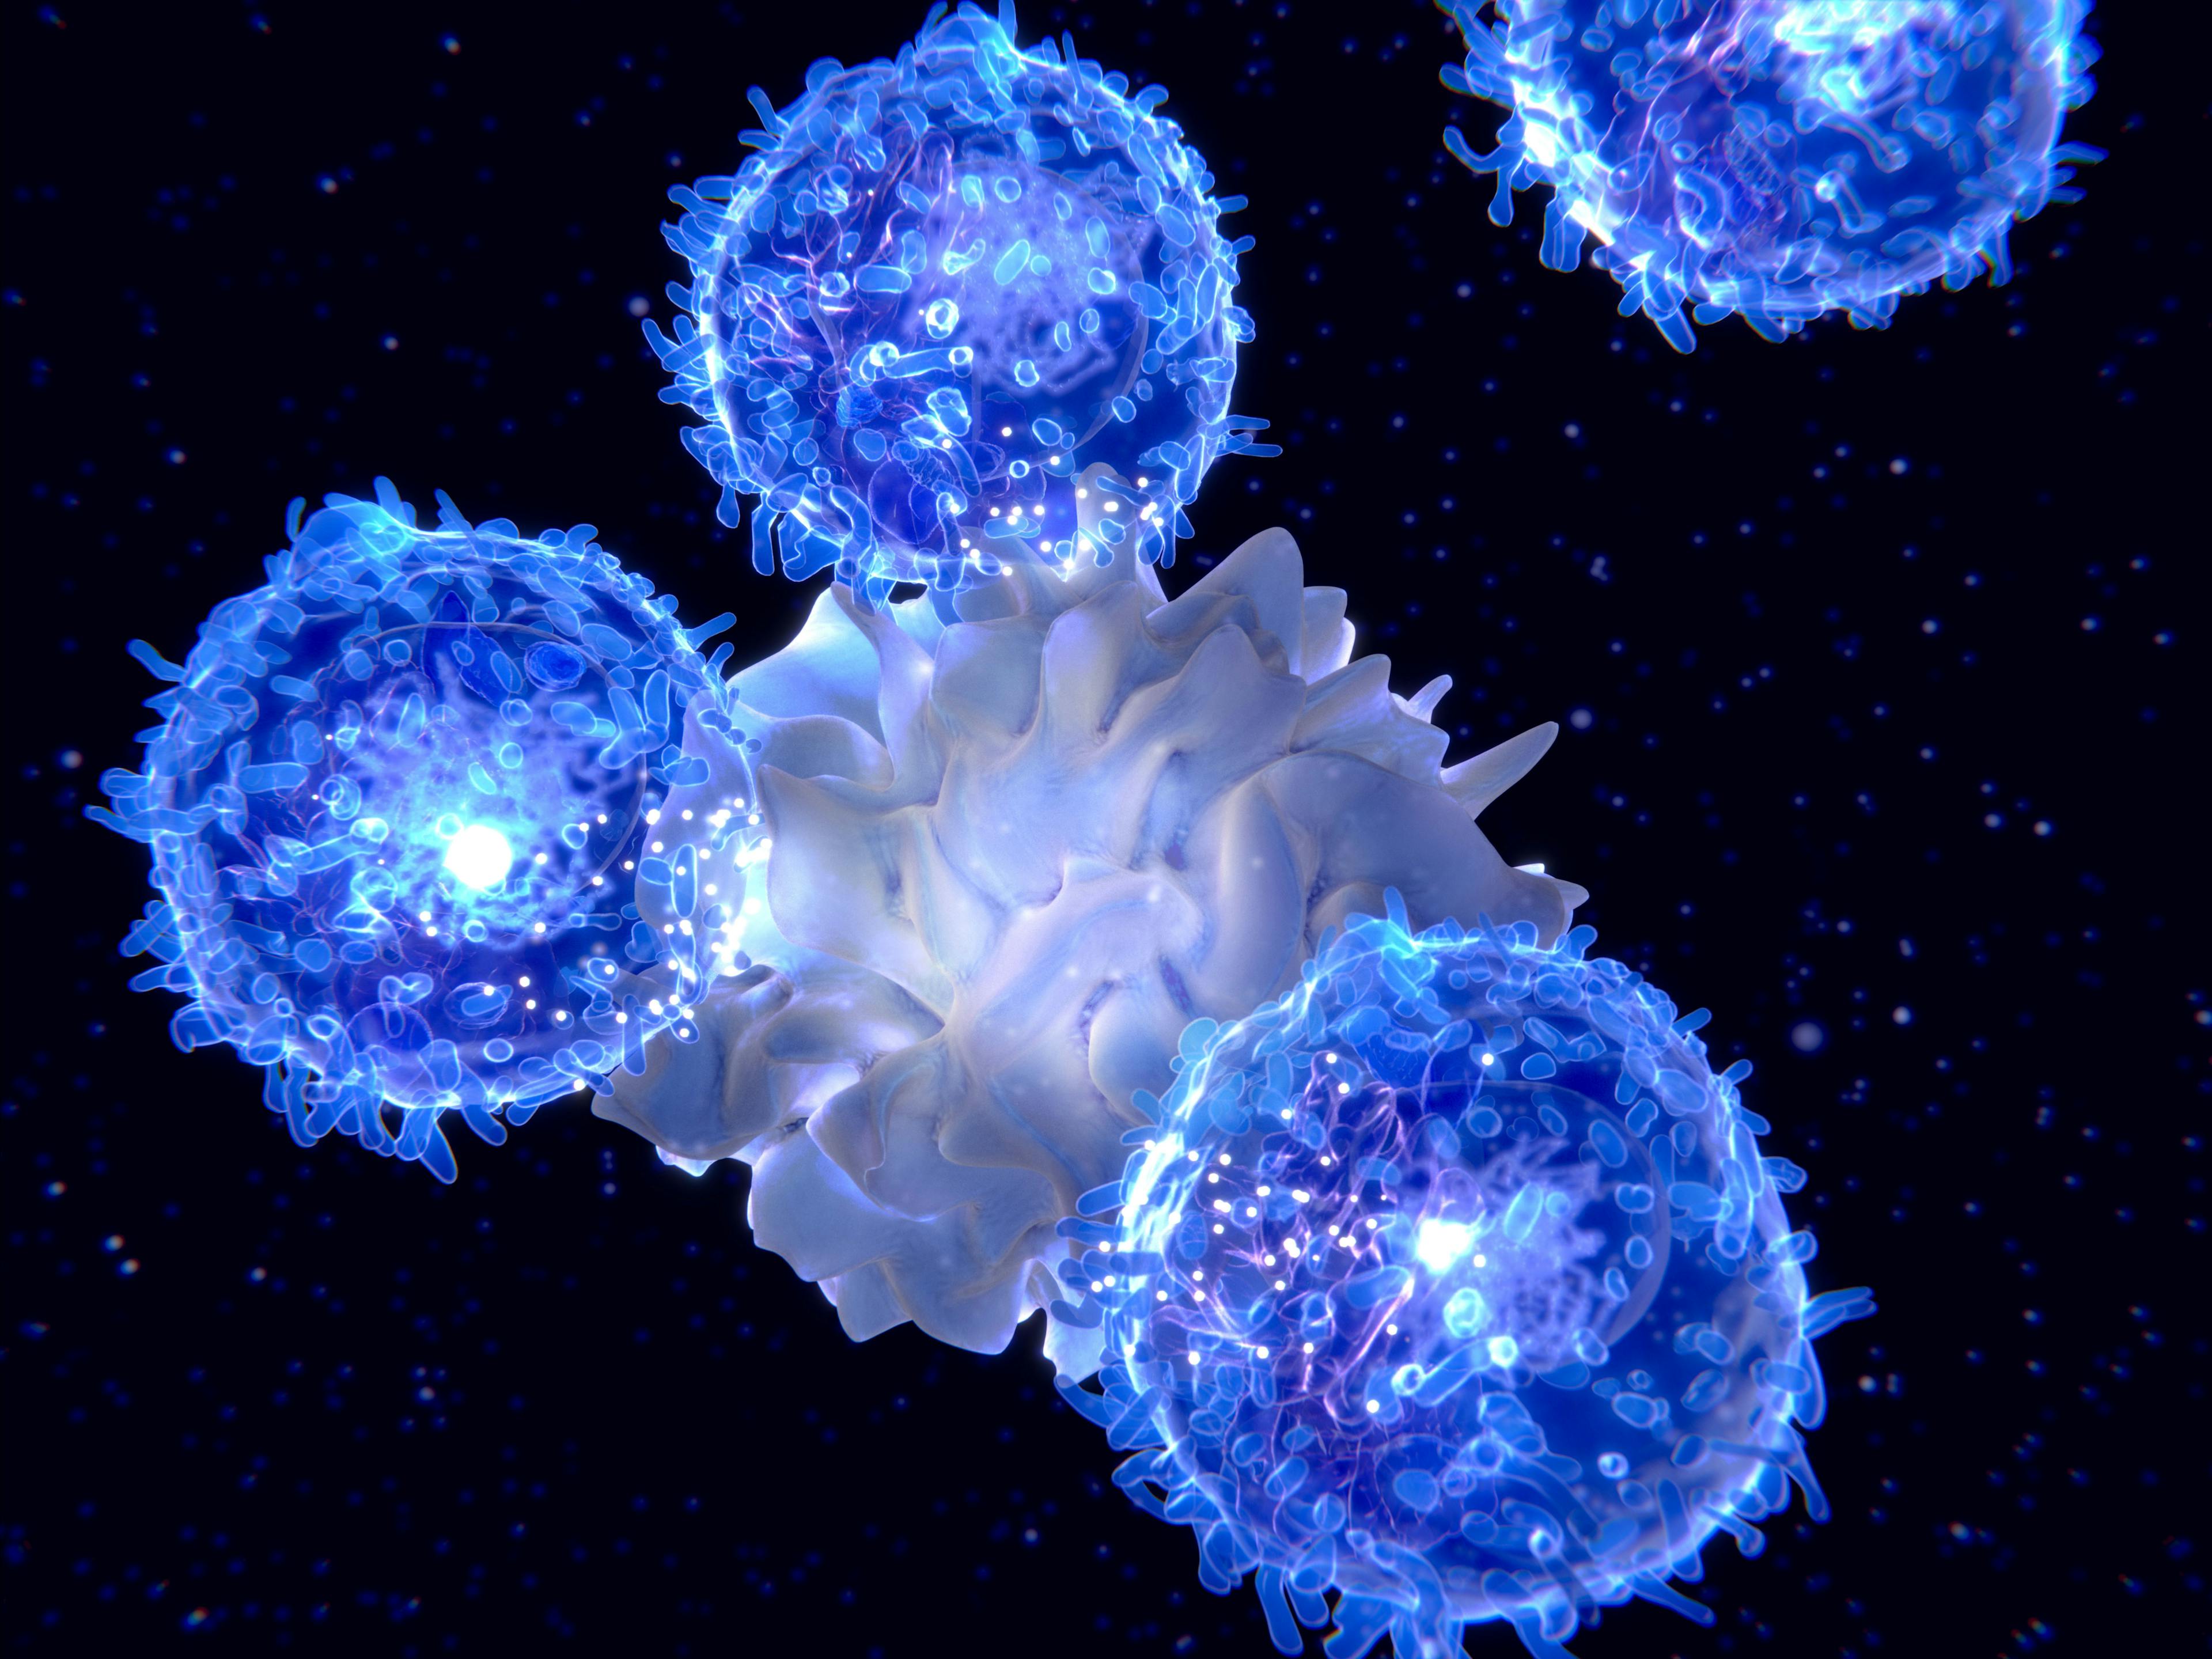 lymphocyte and helper T cells